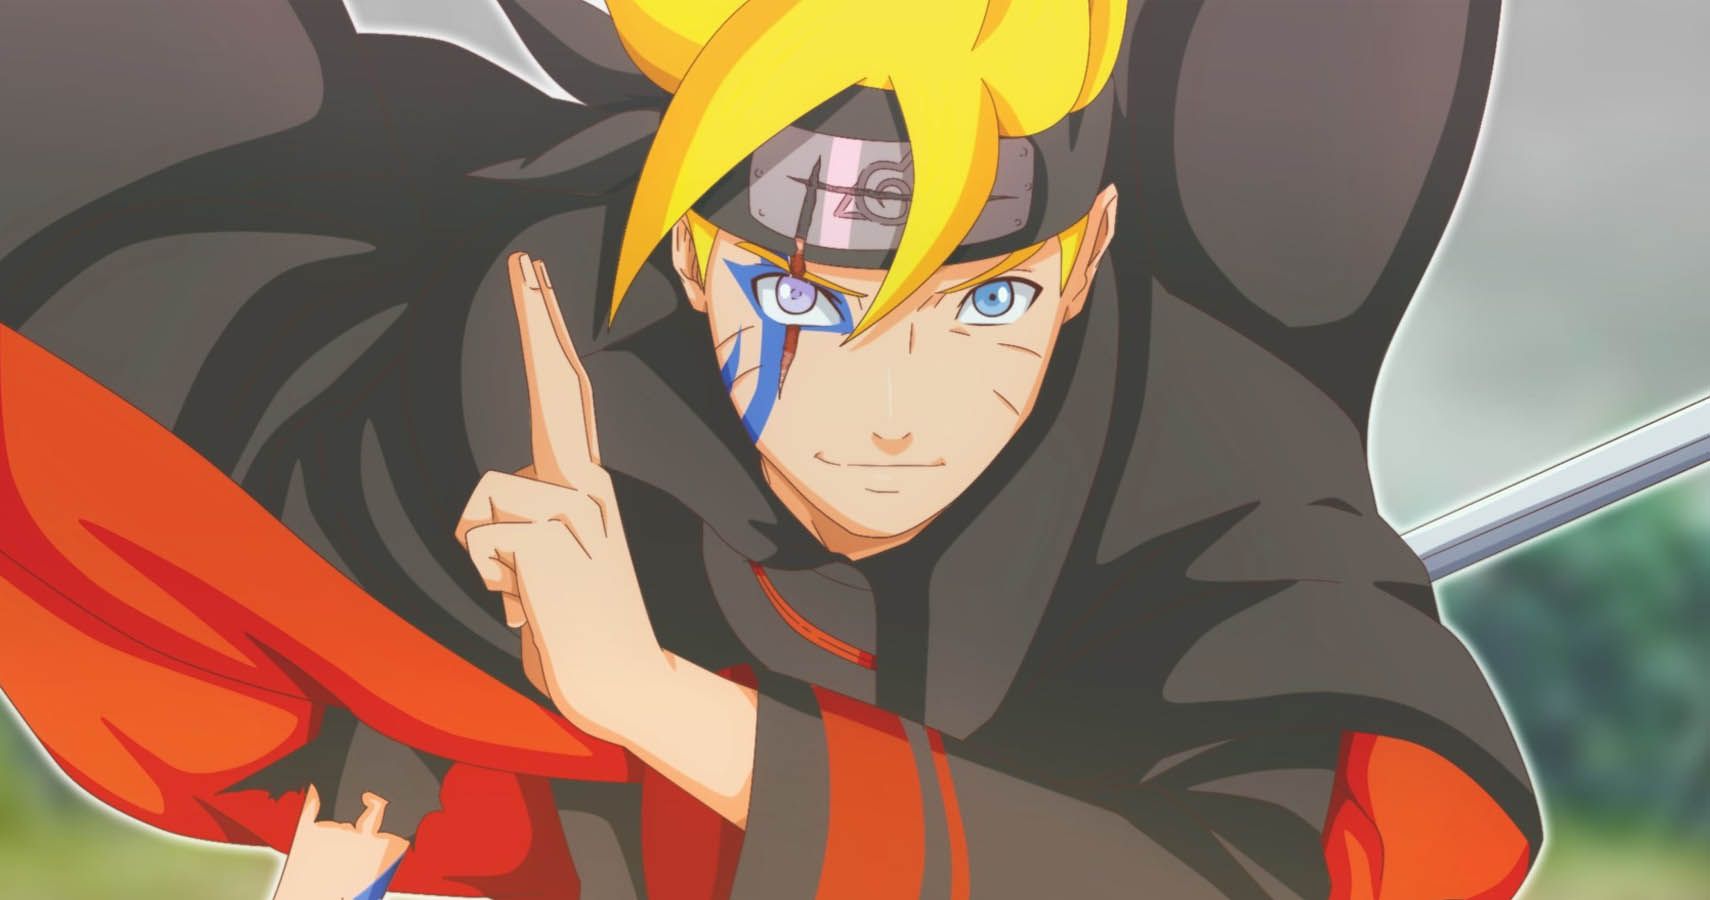 Boruto Reveals Naruto's Desperate New Goal